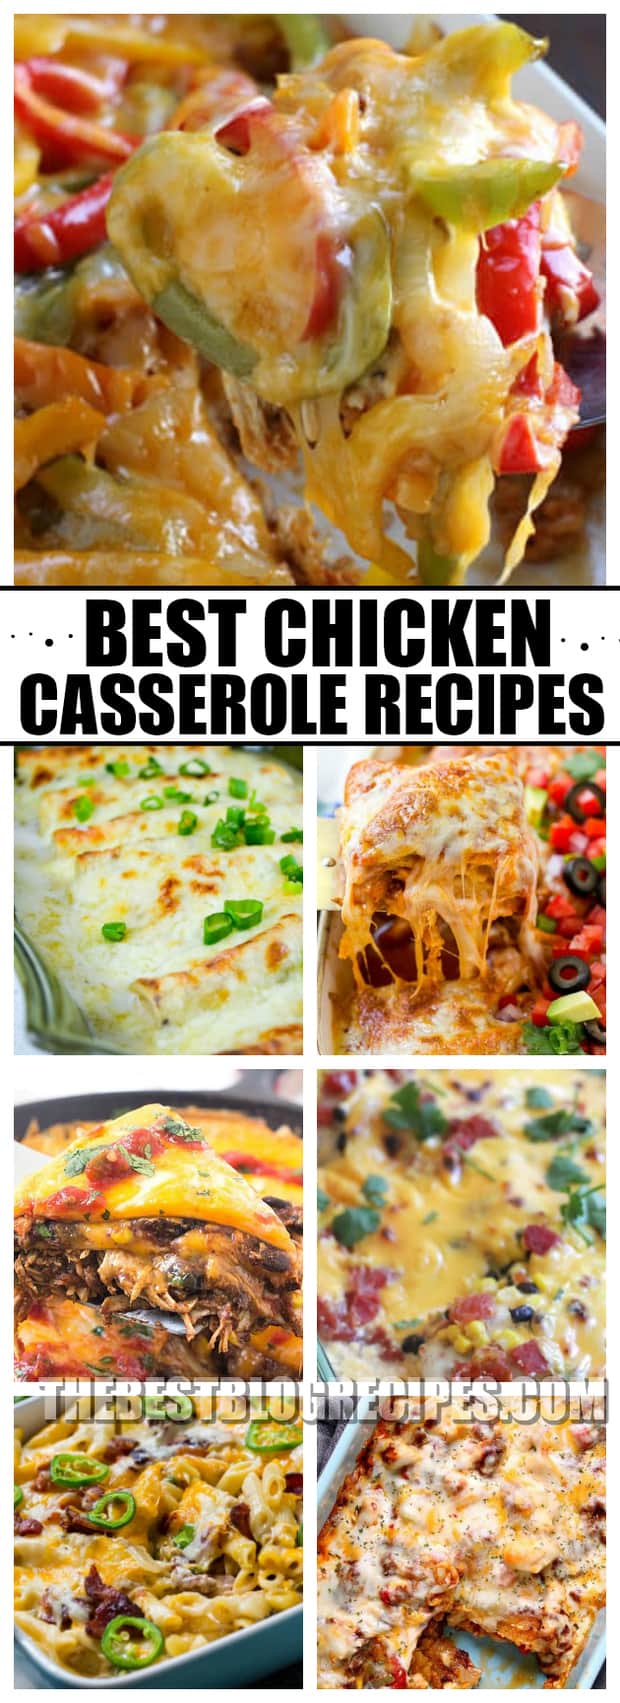 The Best Chicken Casserole Recipes